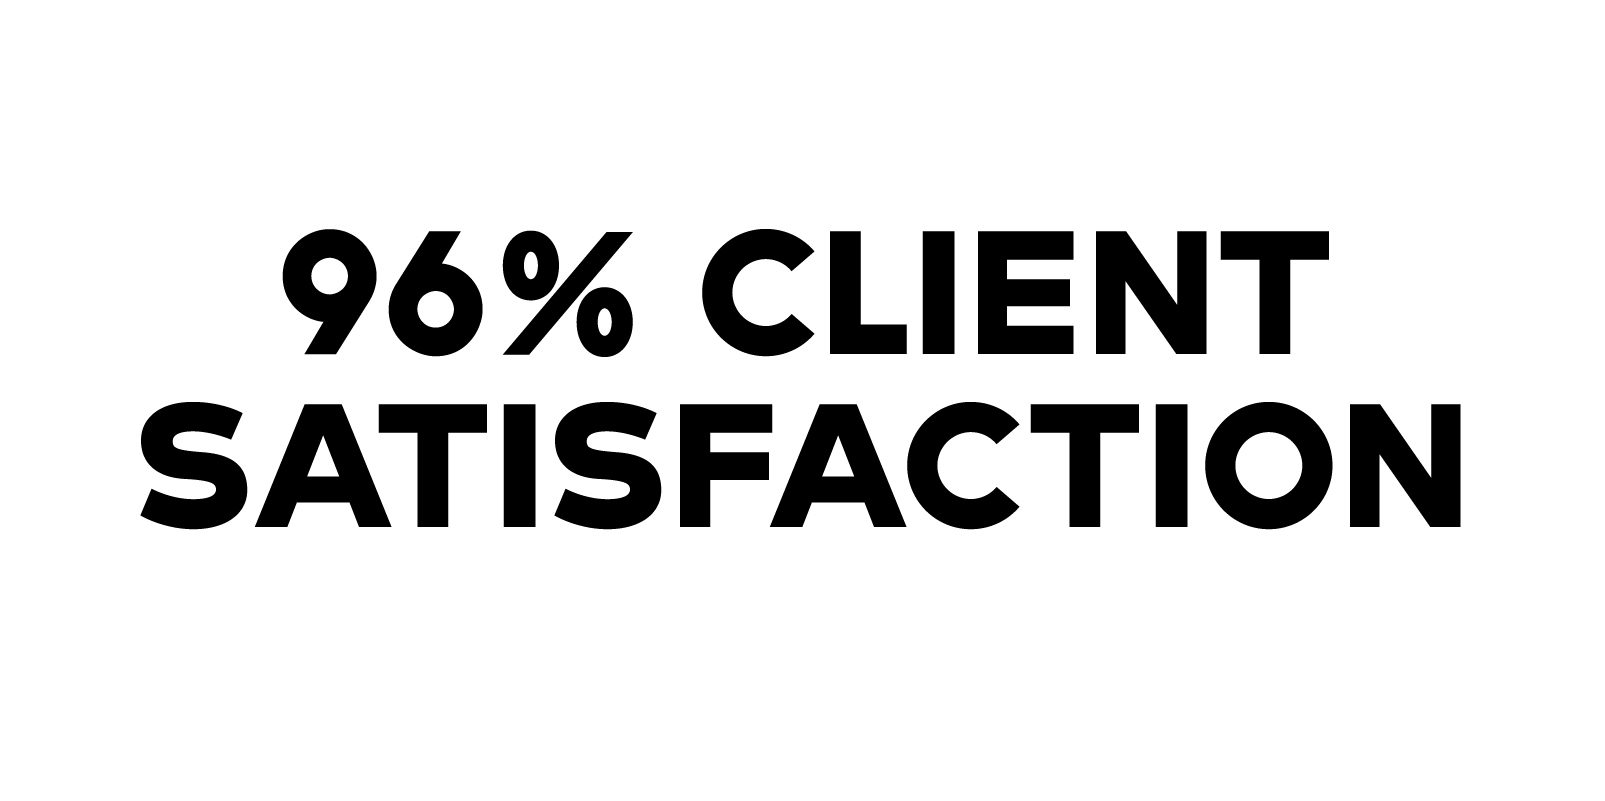 96 client satisfaction 1